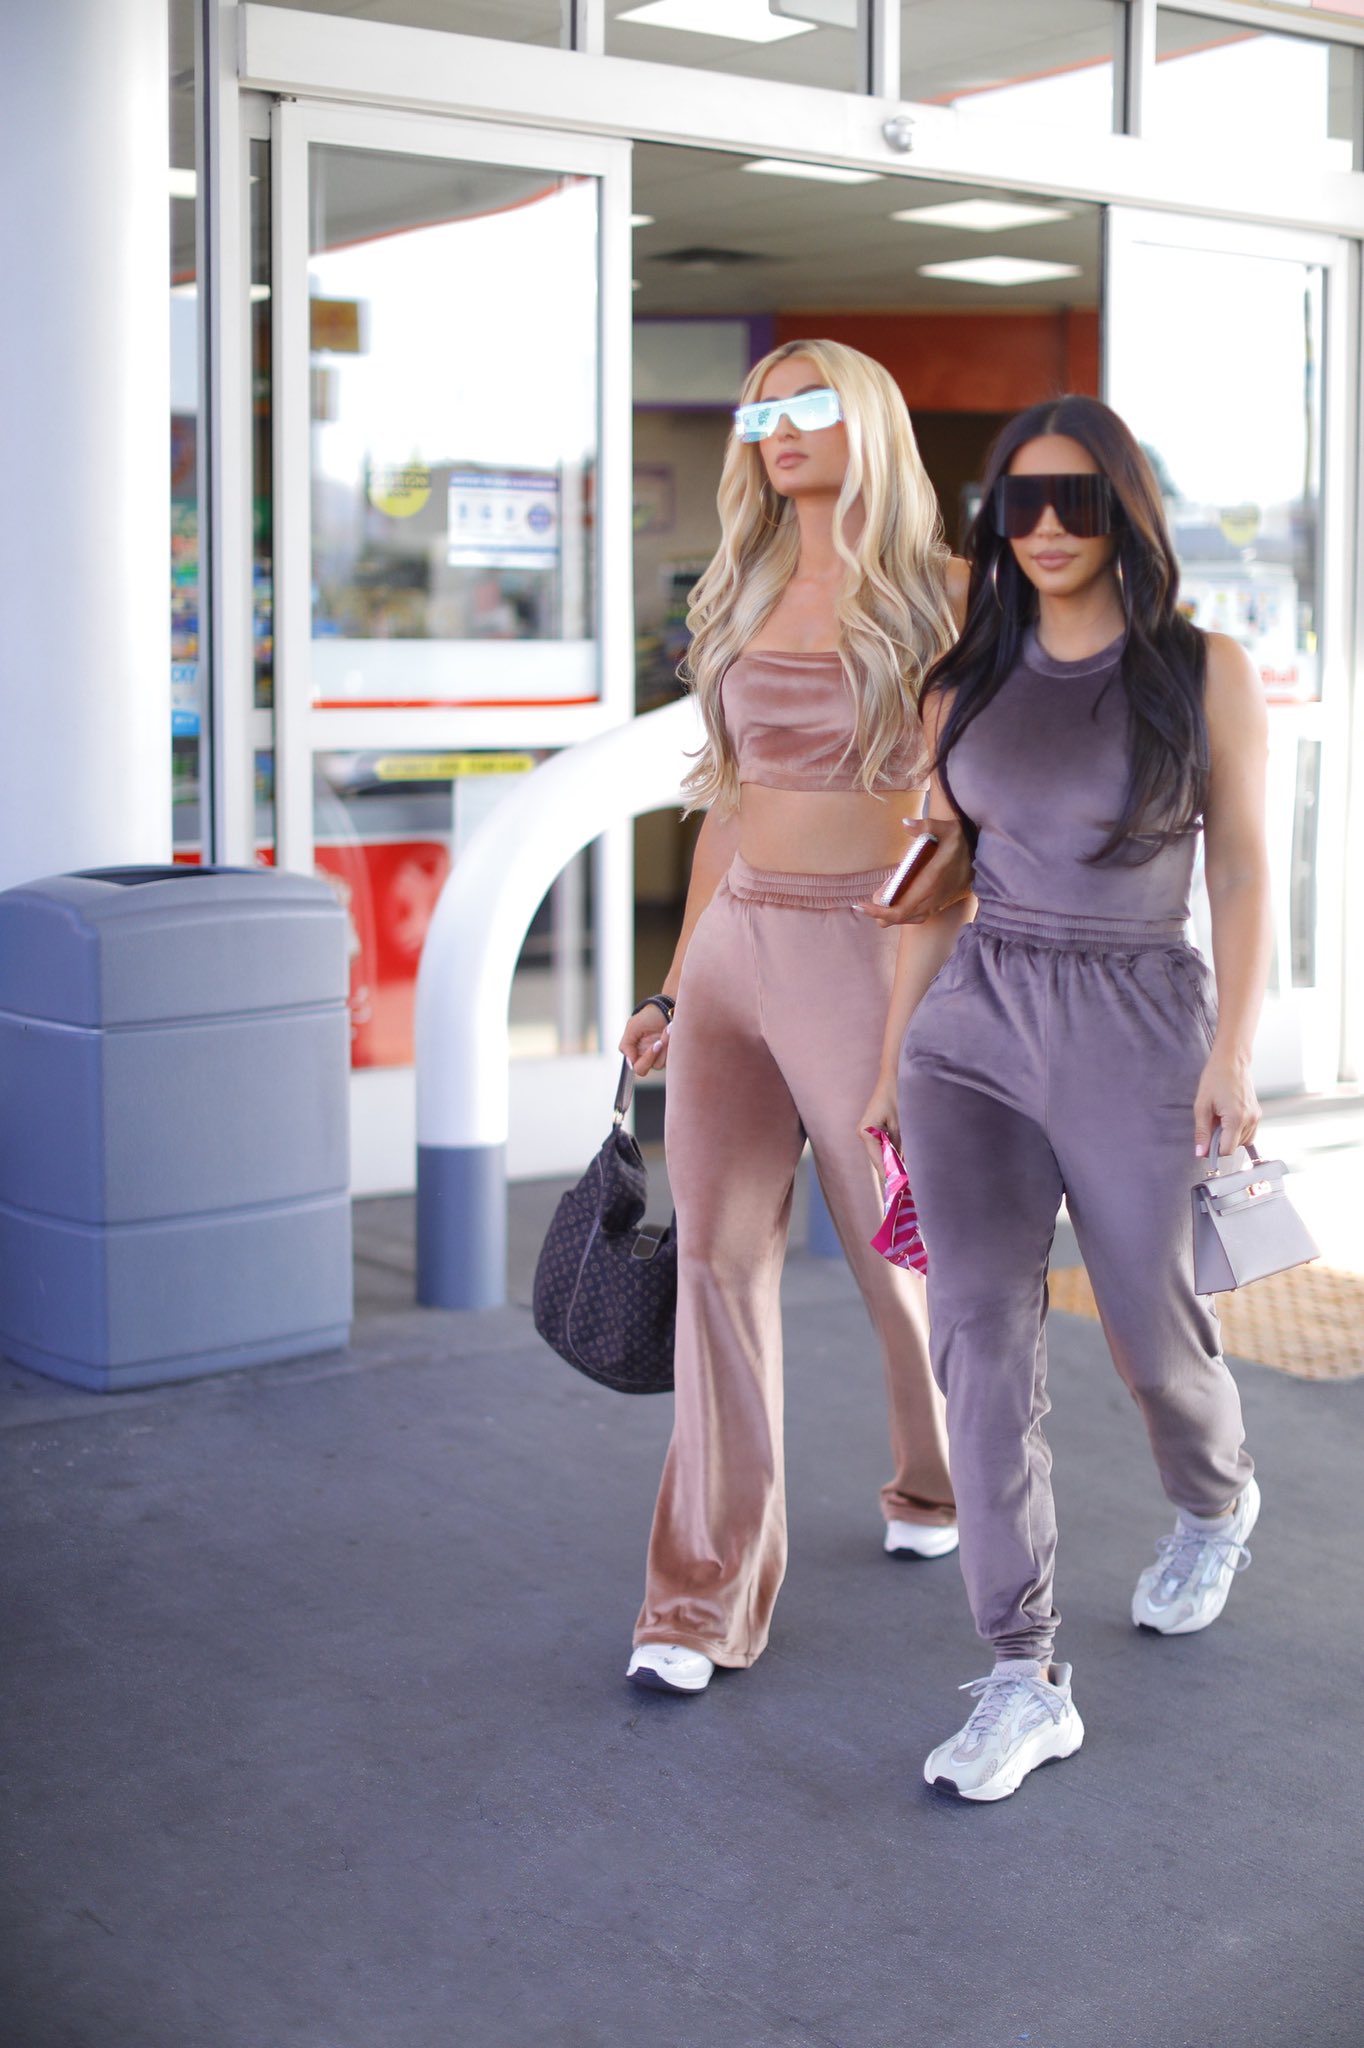 Kim Kardashian and her old boss Paris Hilton serve early 2000s